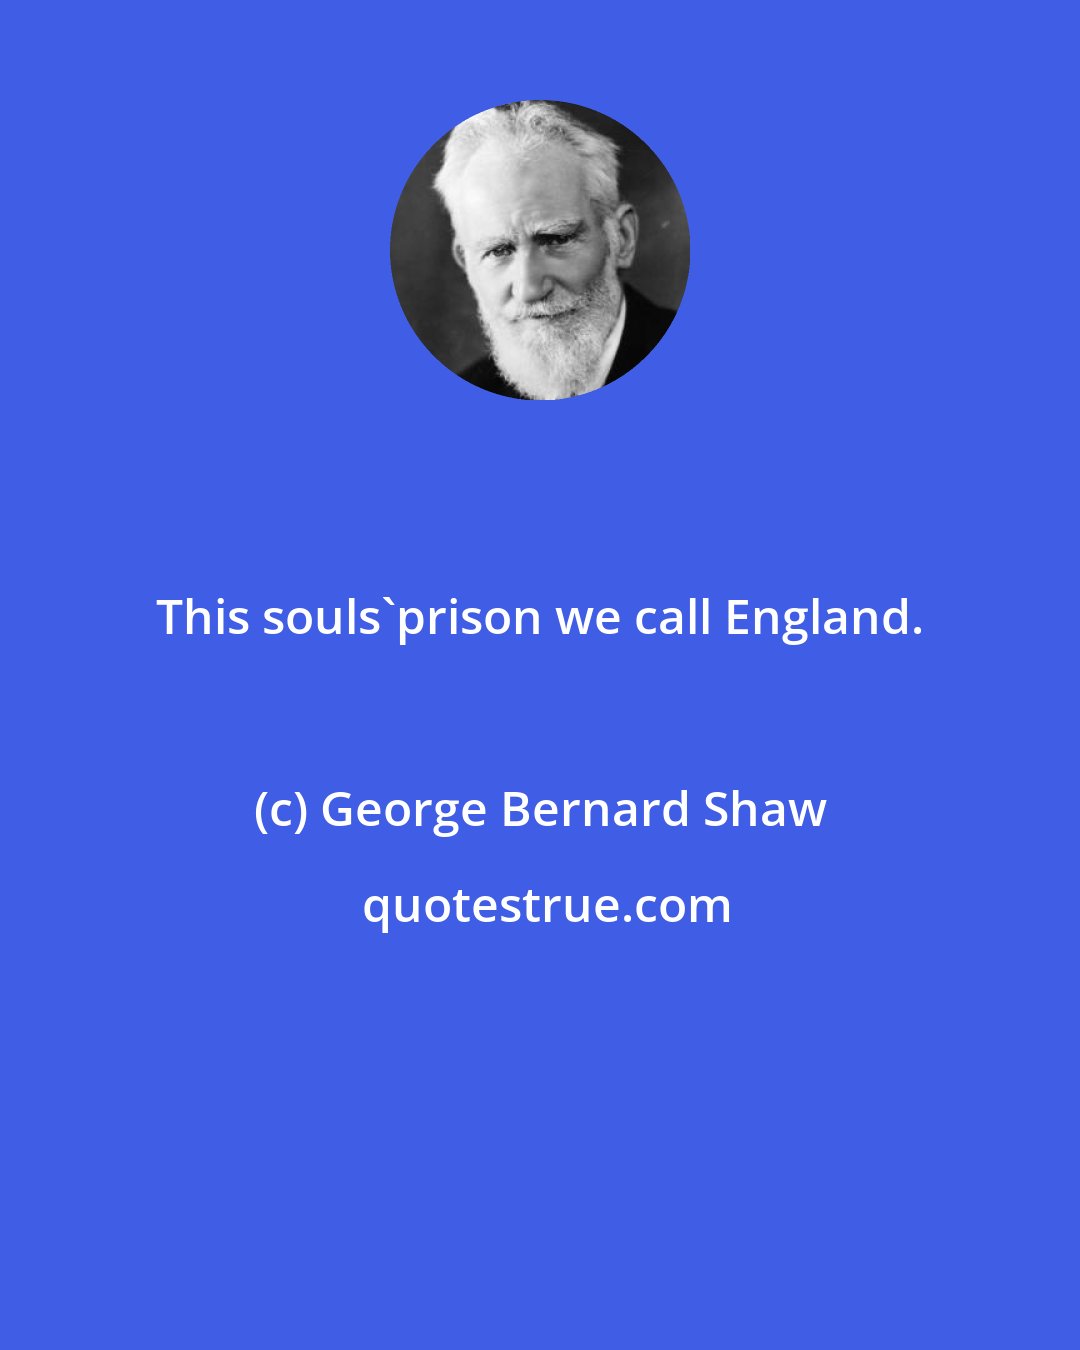 George Bernard Shaw: This souls'prison we call England.